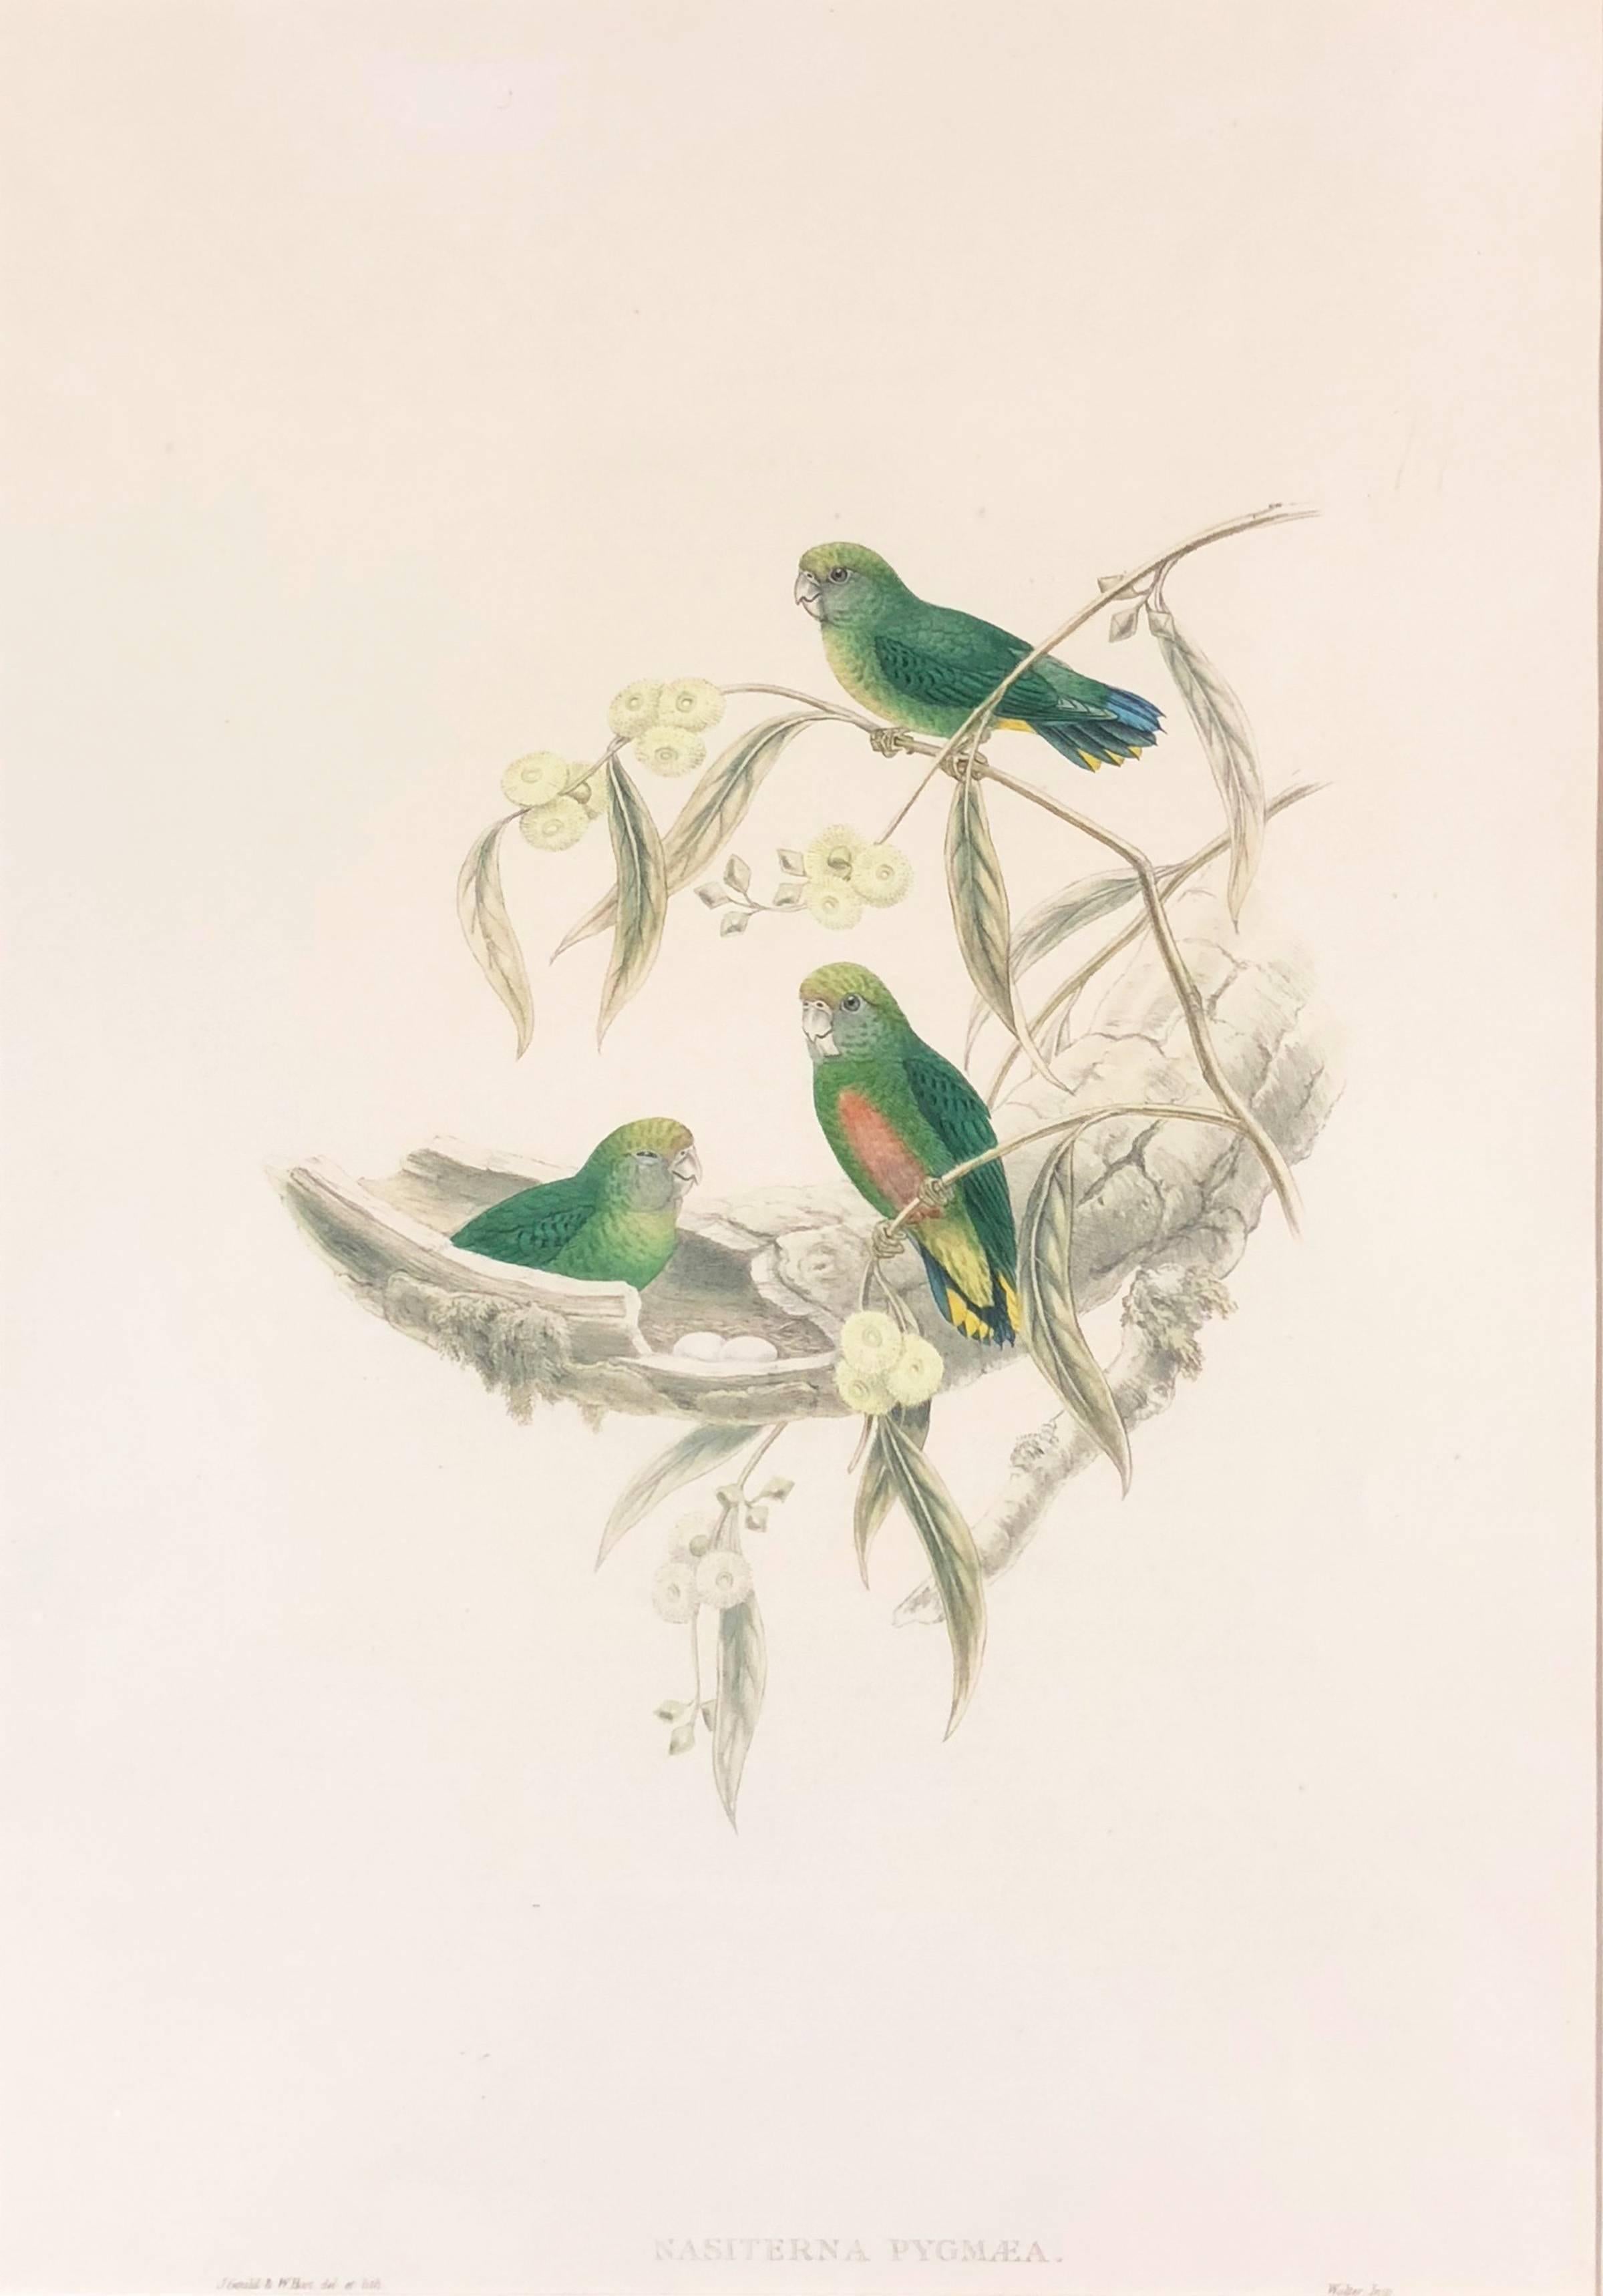 John Gould Animal Print - Nasiterna Pygmae